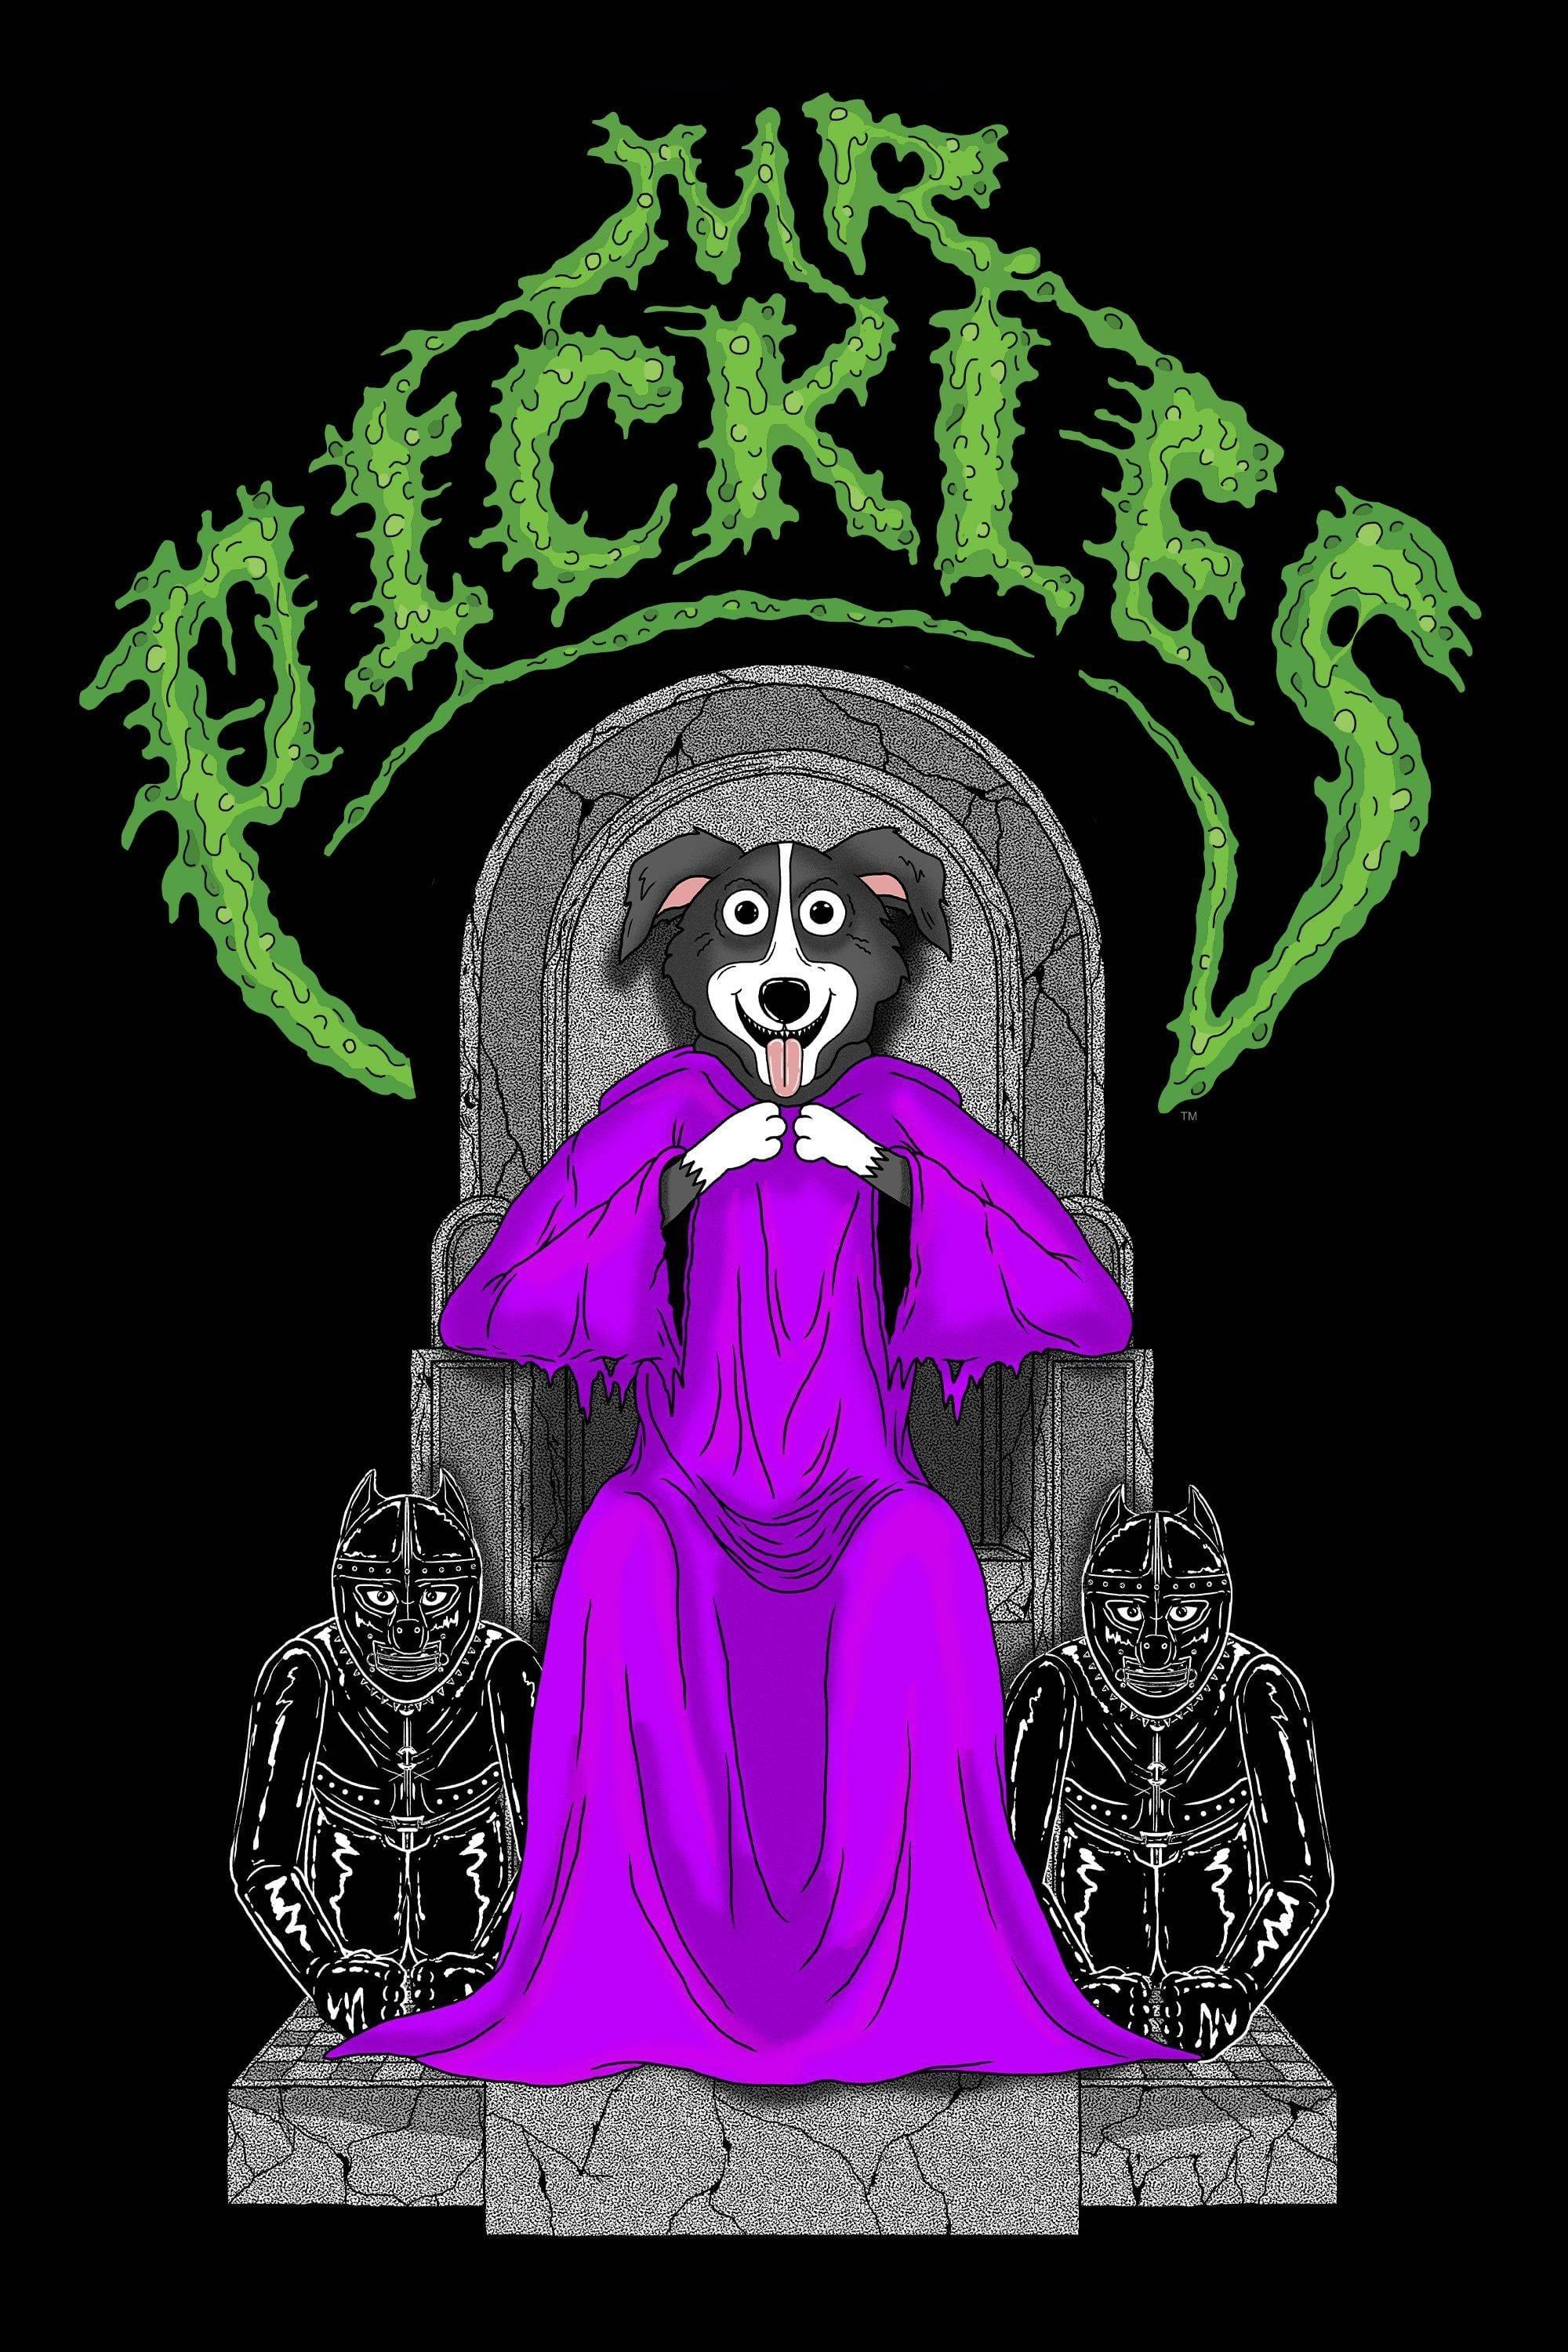 Mr. Pickles poster